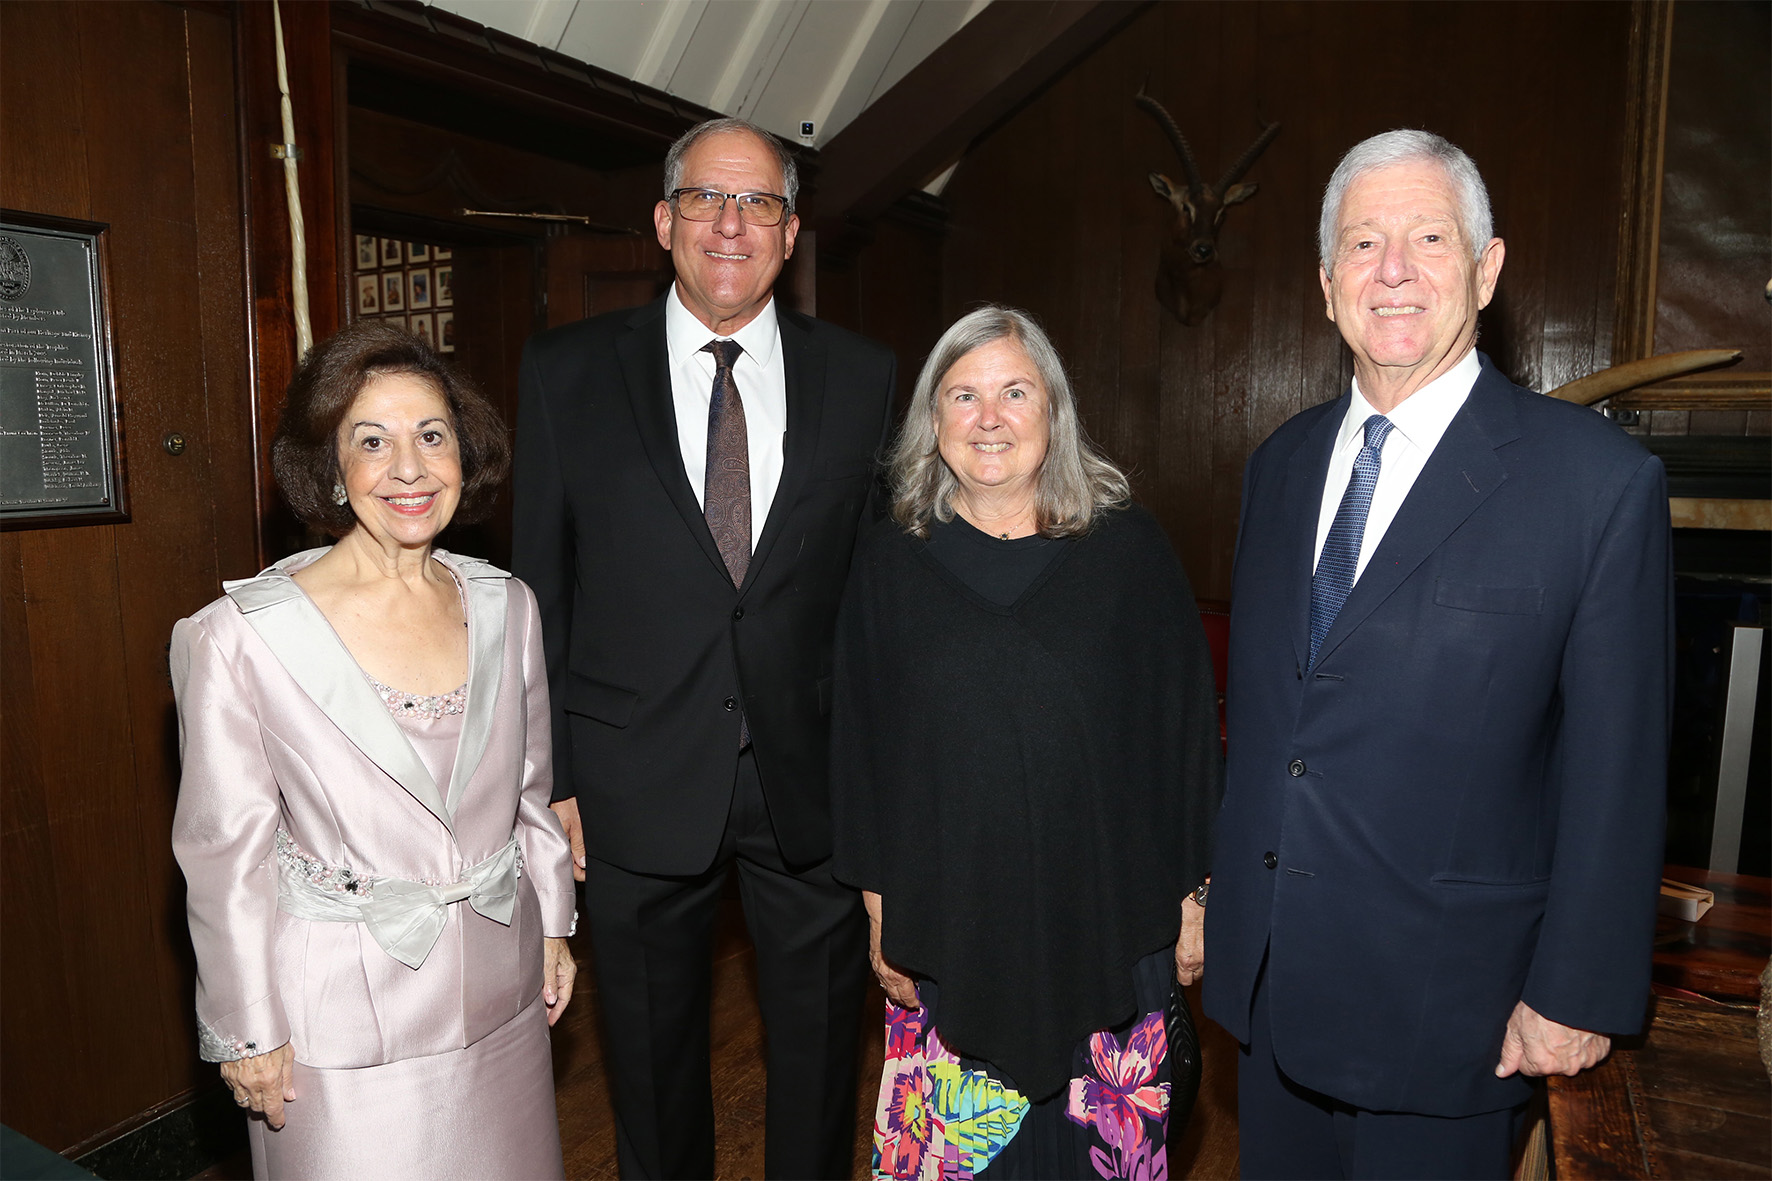 Their Royal Highnesses with Mr. Richard Jankov and Mrs. Margaret Jankov